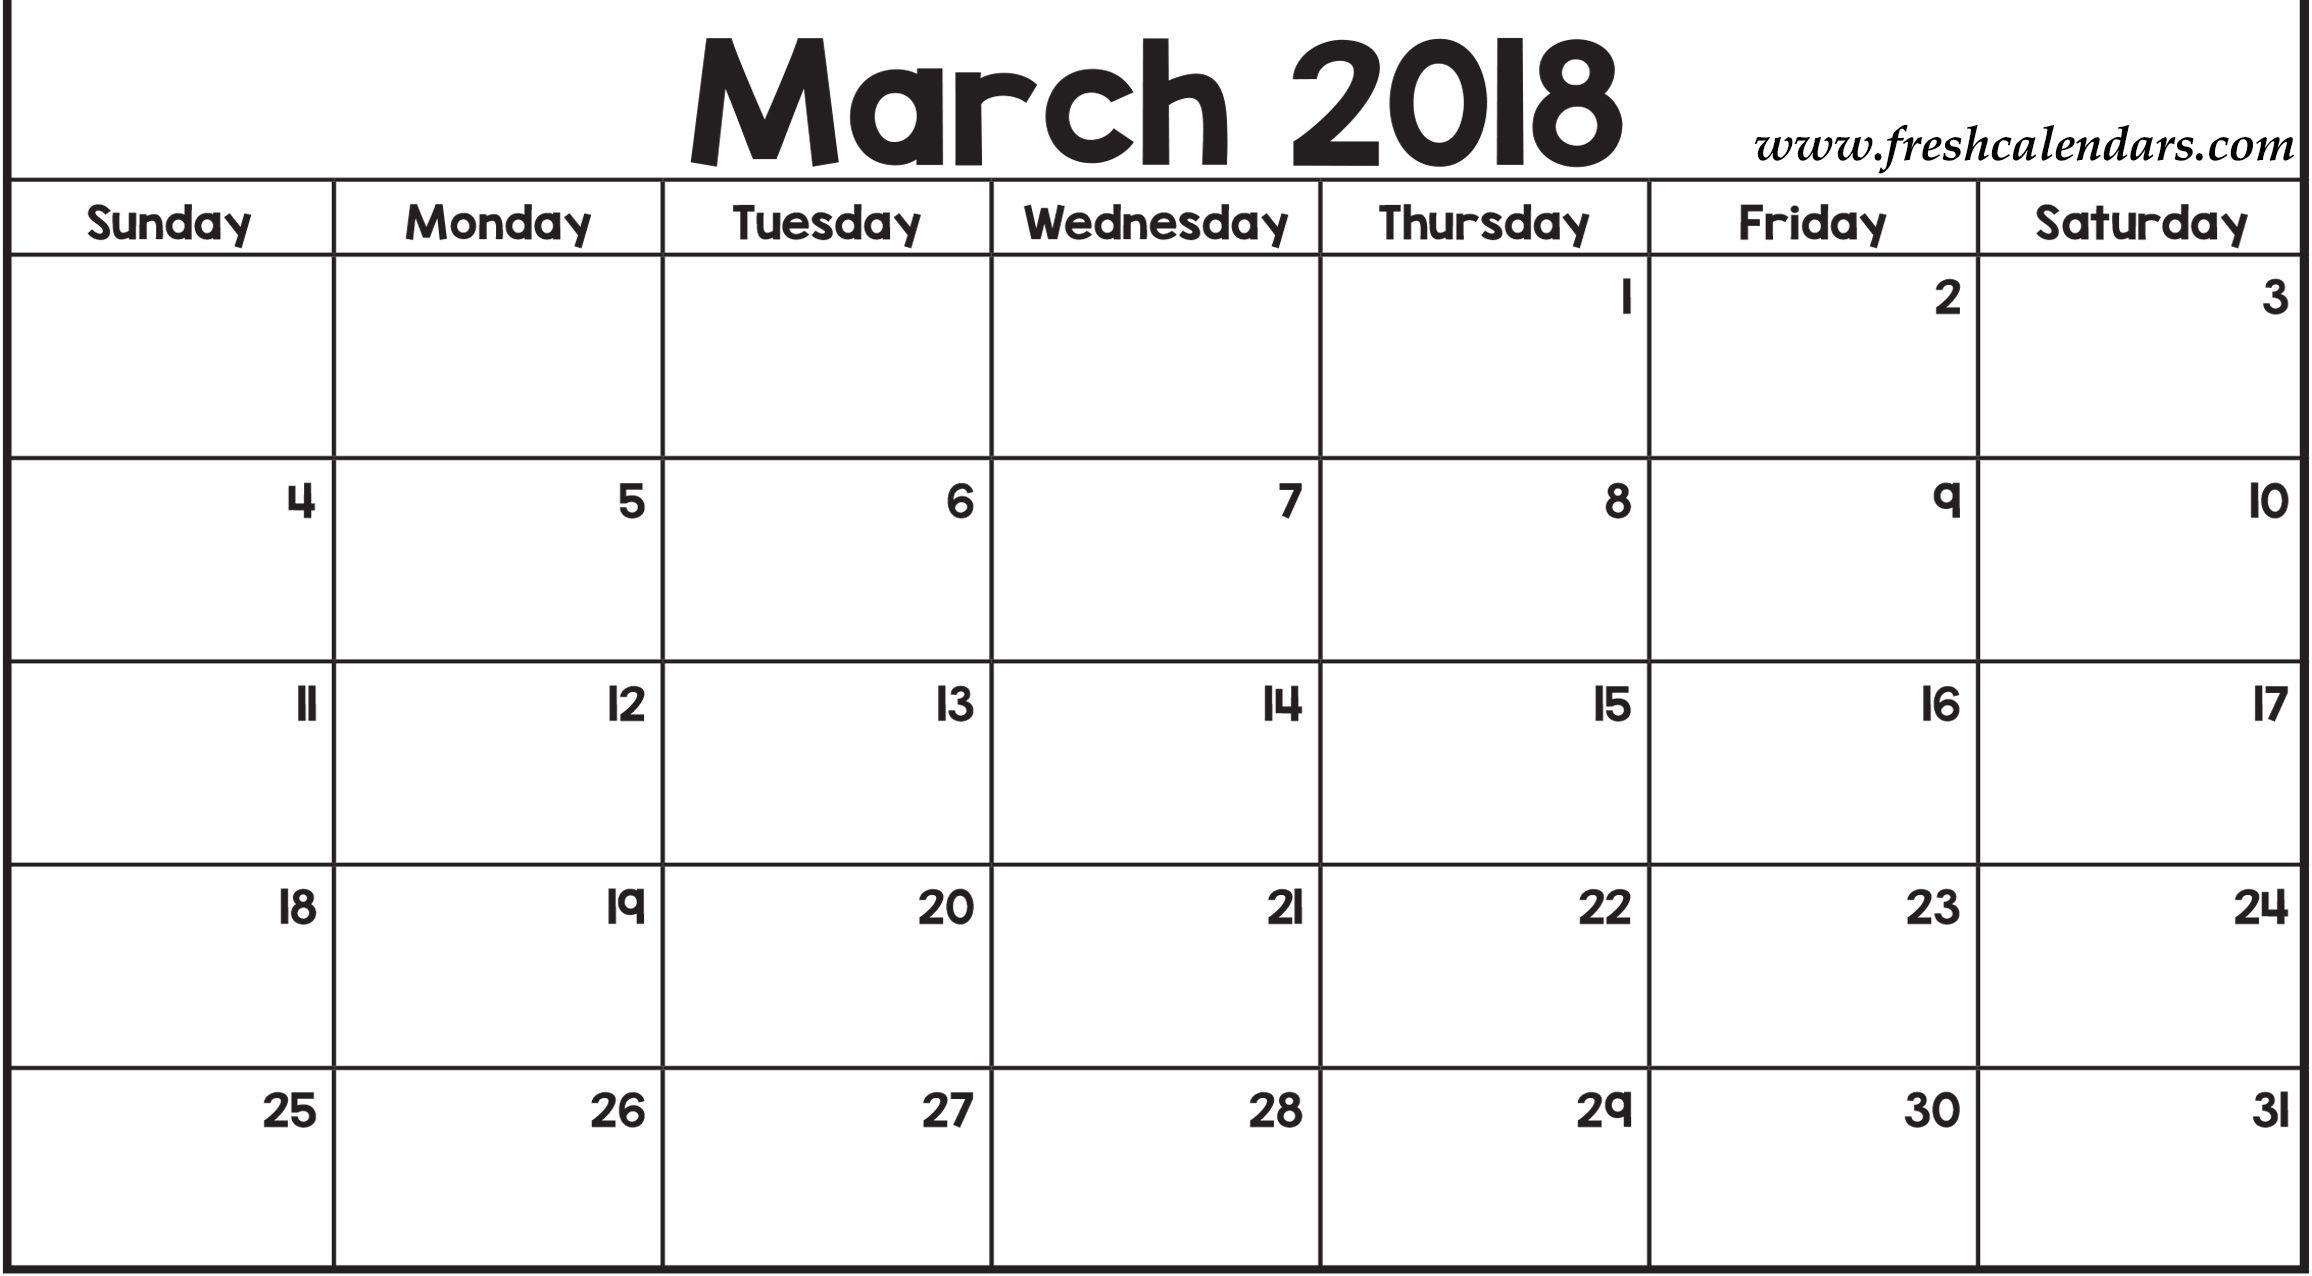 March 2018 Calendar Wallpapers Wallpaper Cave